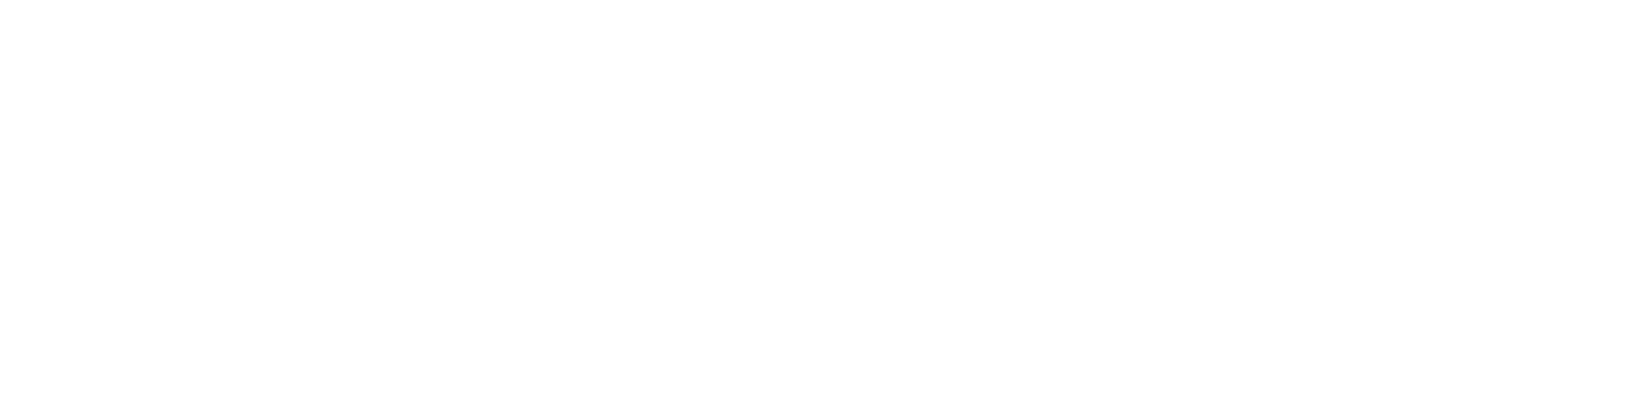 Ermenegildo Zegna Logo groß für dunkle Hintergründe (transparentes PNG)